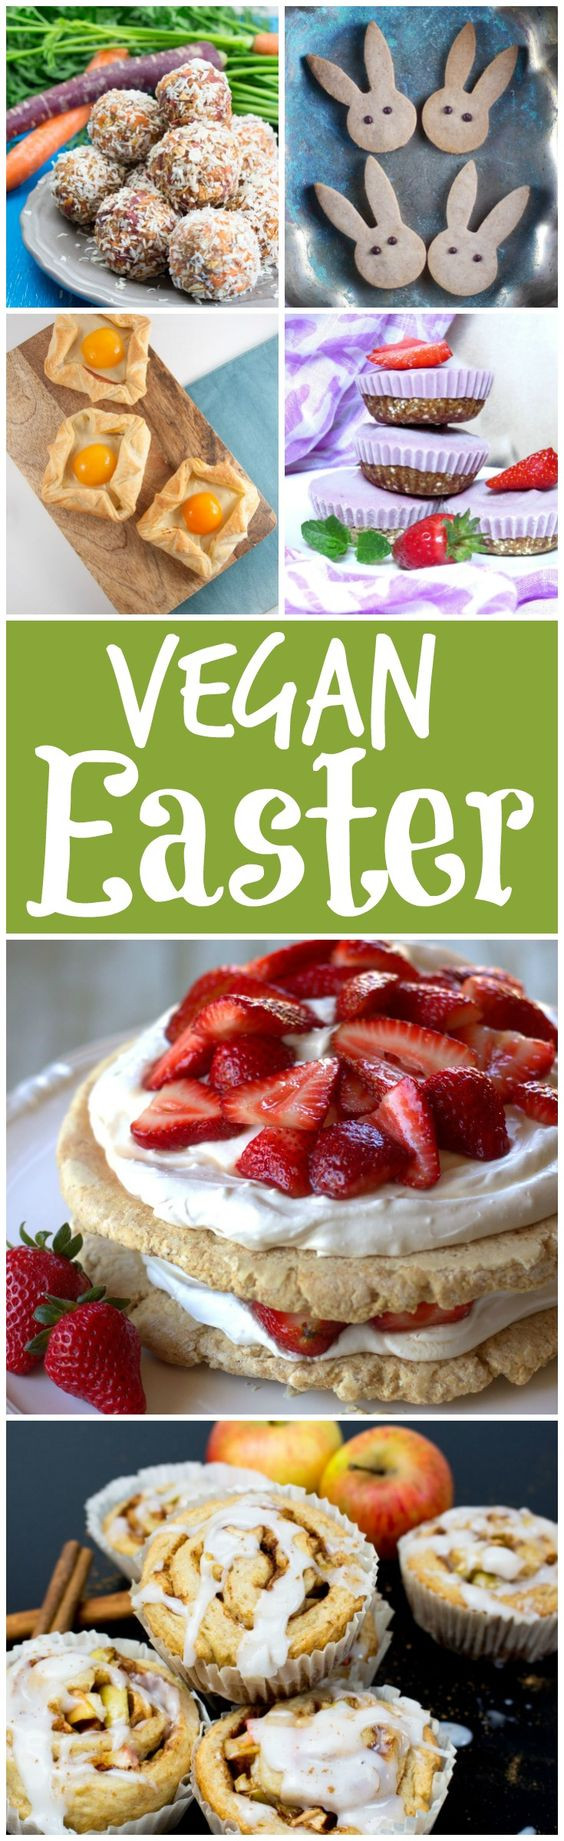 Vegan Easter Desserts
 15 Delicious Vegan Easter Recipes